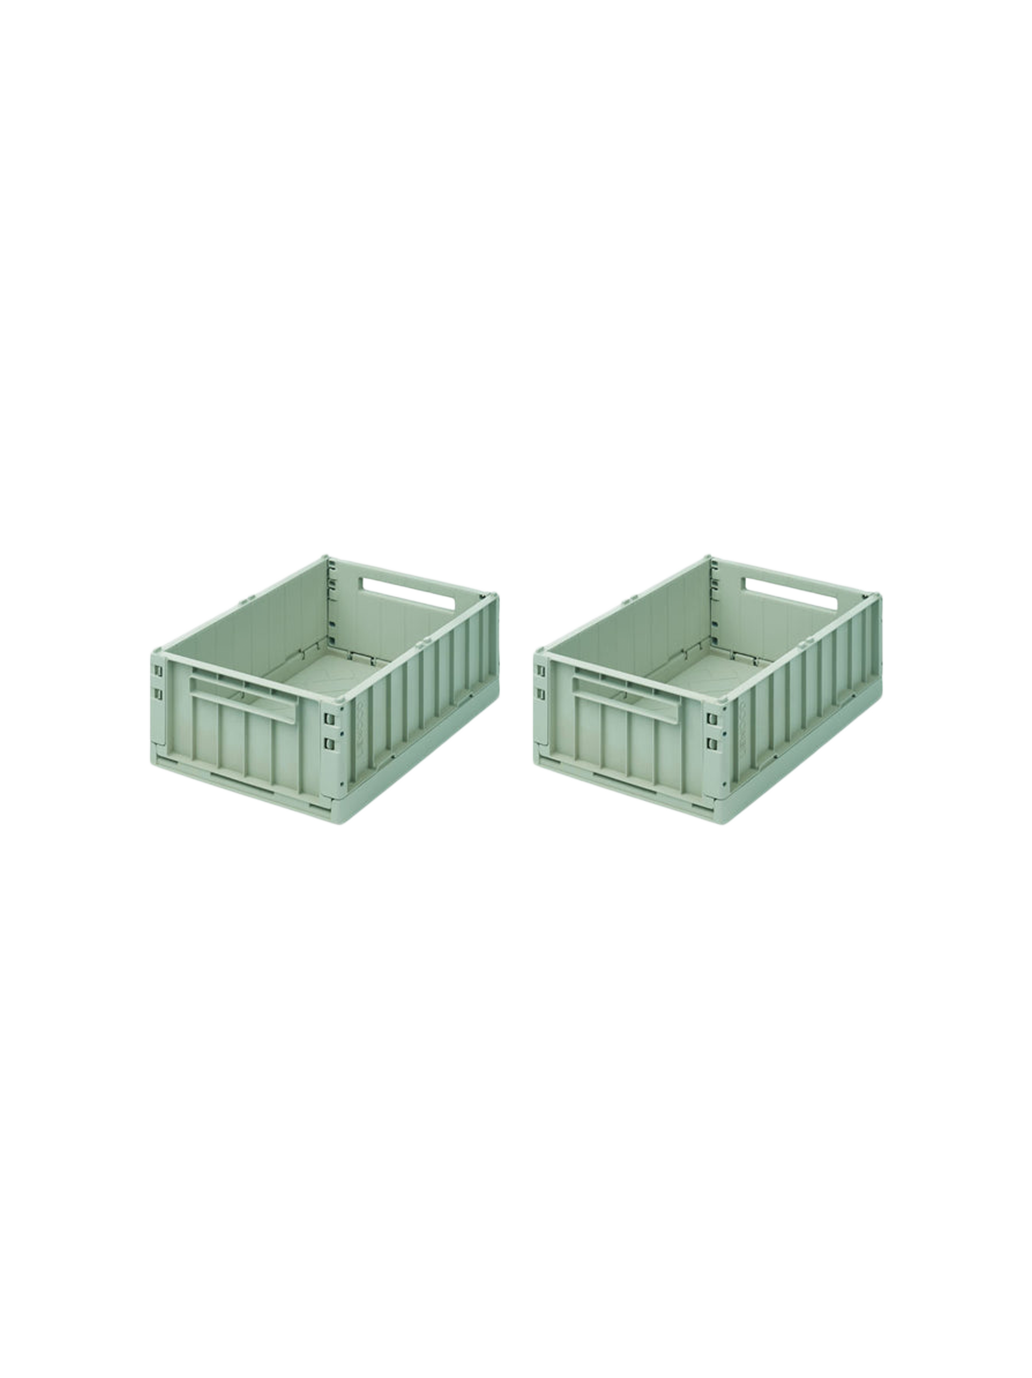 Paquete de 2 cajas modulares.